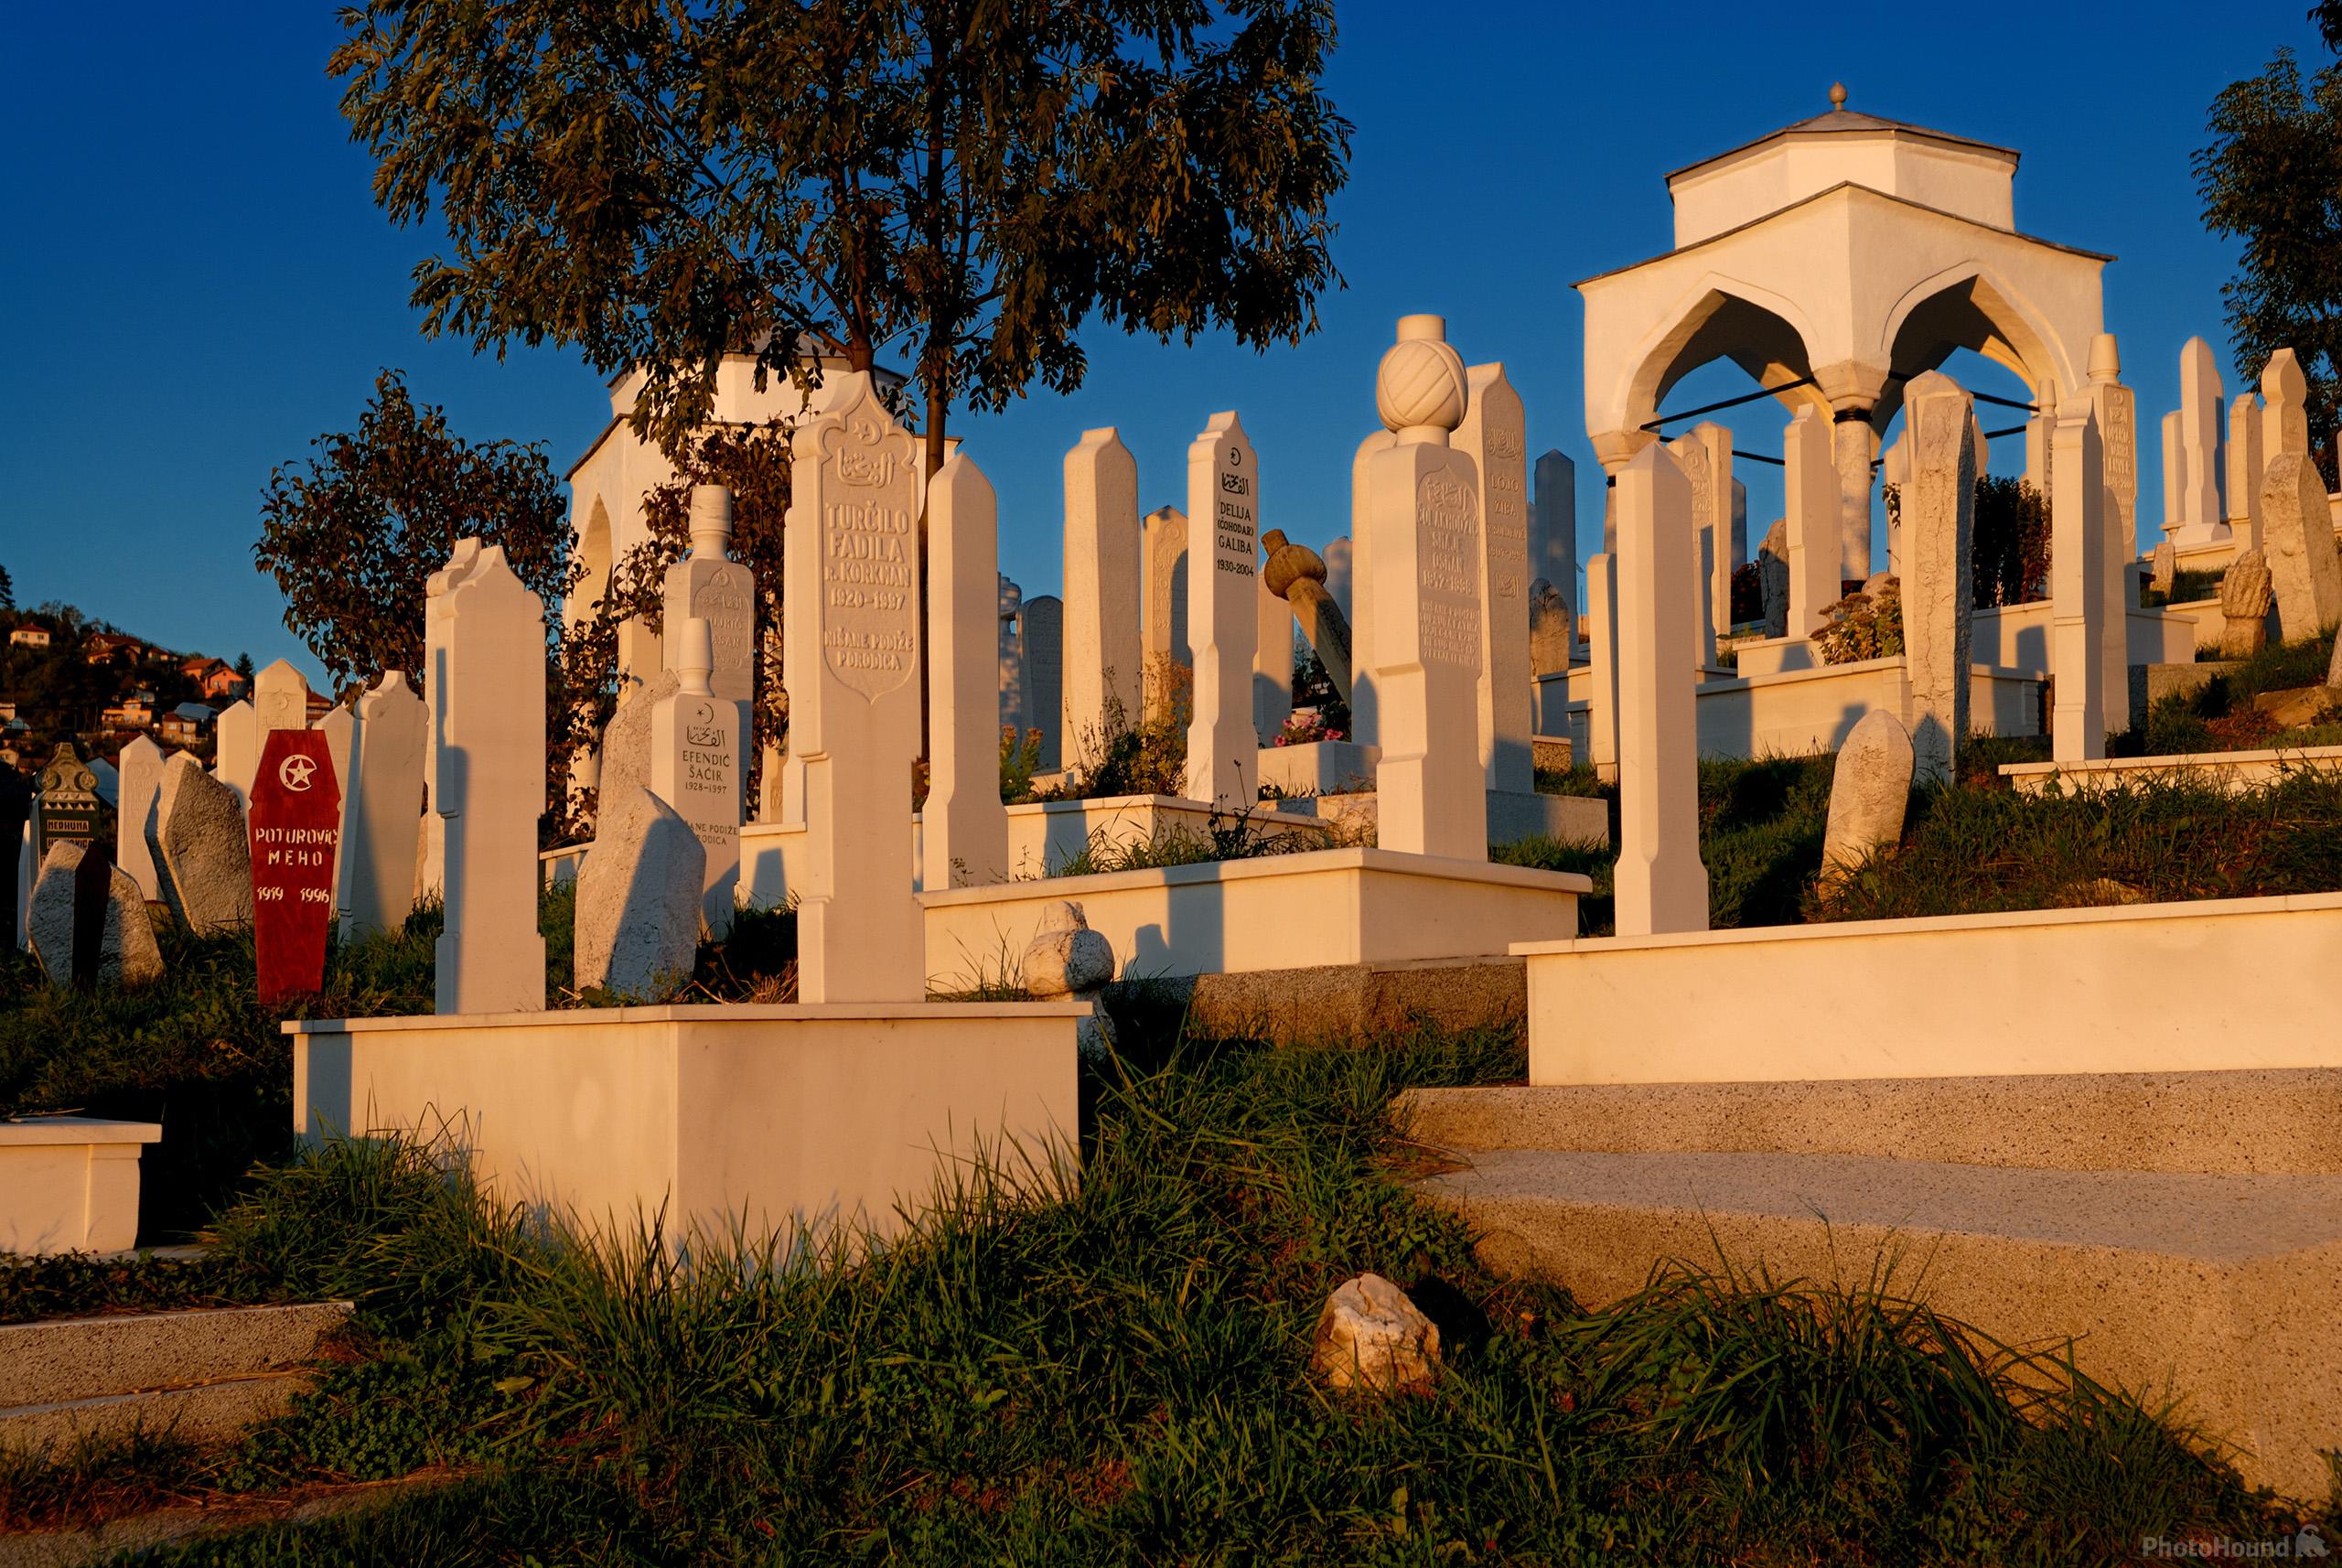 Image of Alifakovac Cemetery by Luka Esenko